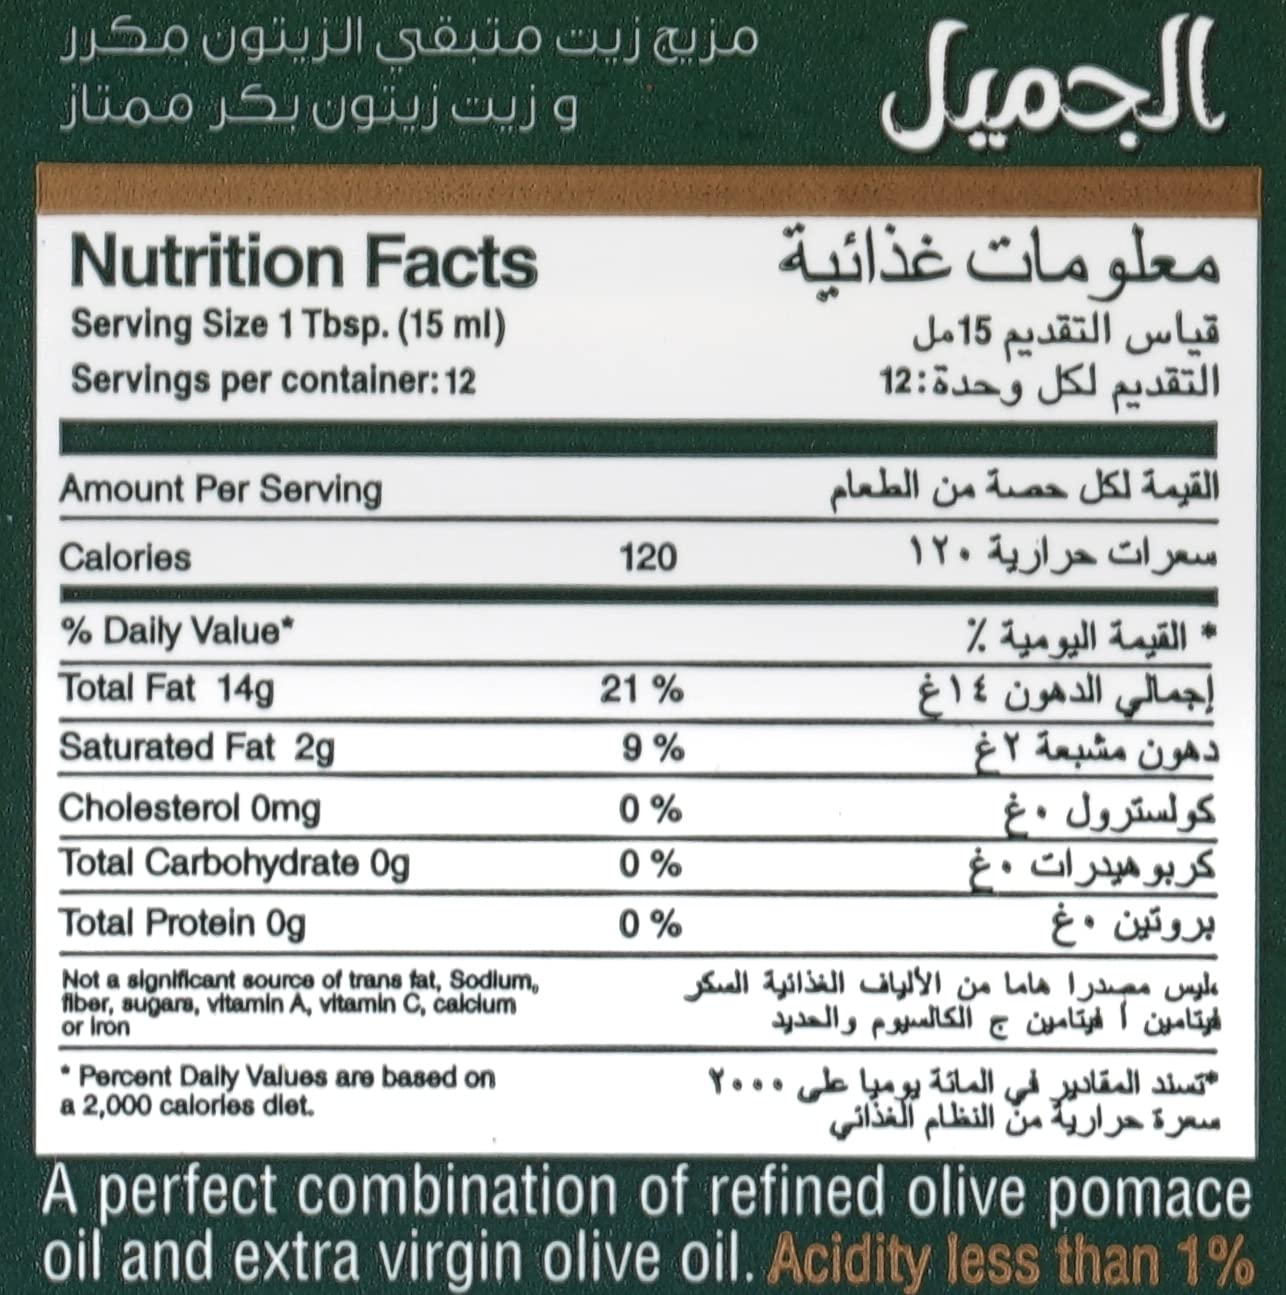 Al Jameel Olive Pomace Oil 175 ml